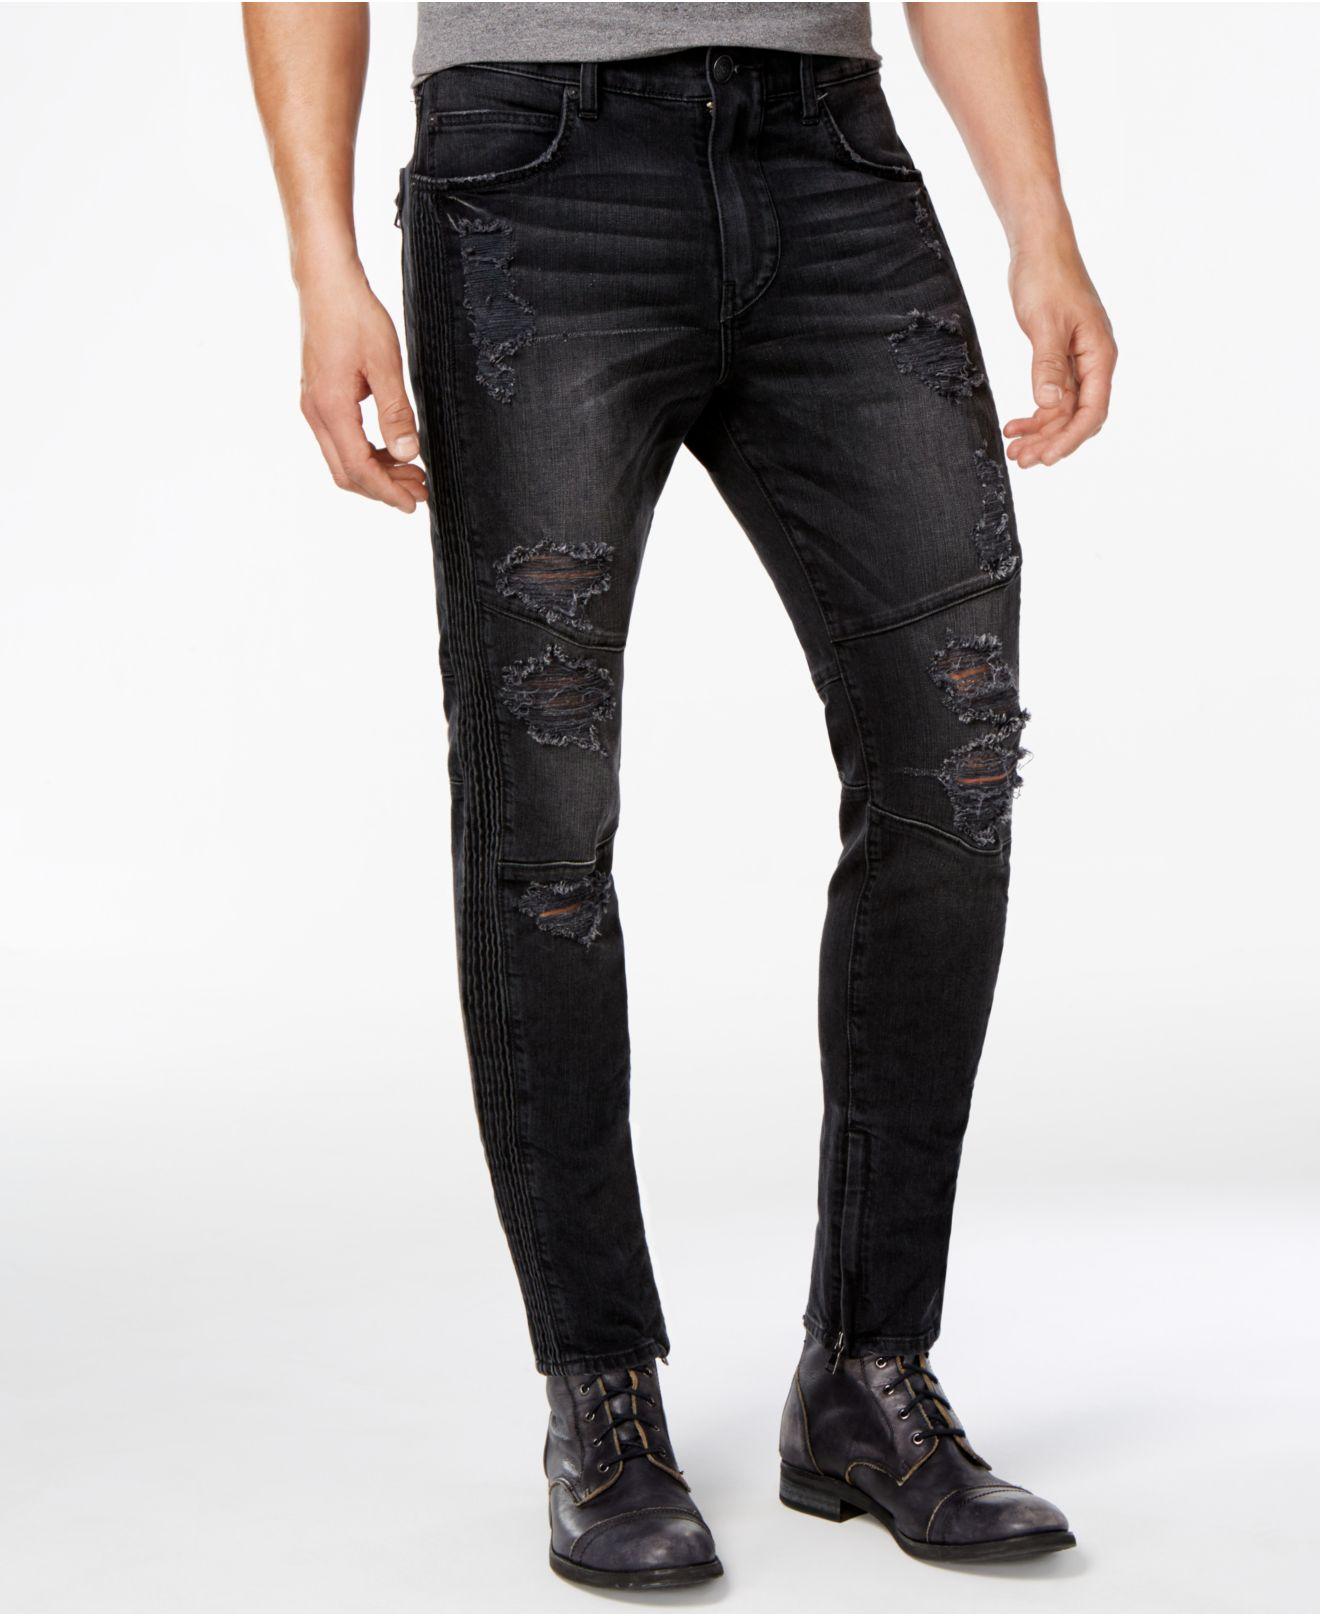 Lyst - True Religion Men's Ankle-zip Ripped Skinny Jeans in Black for Men